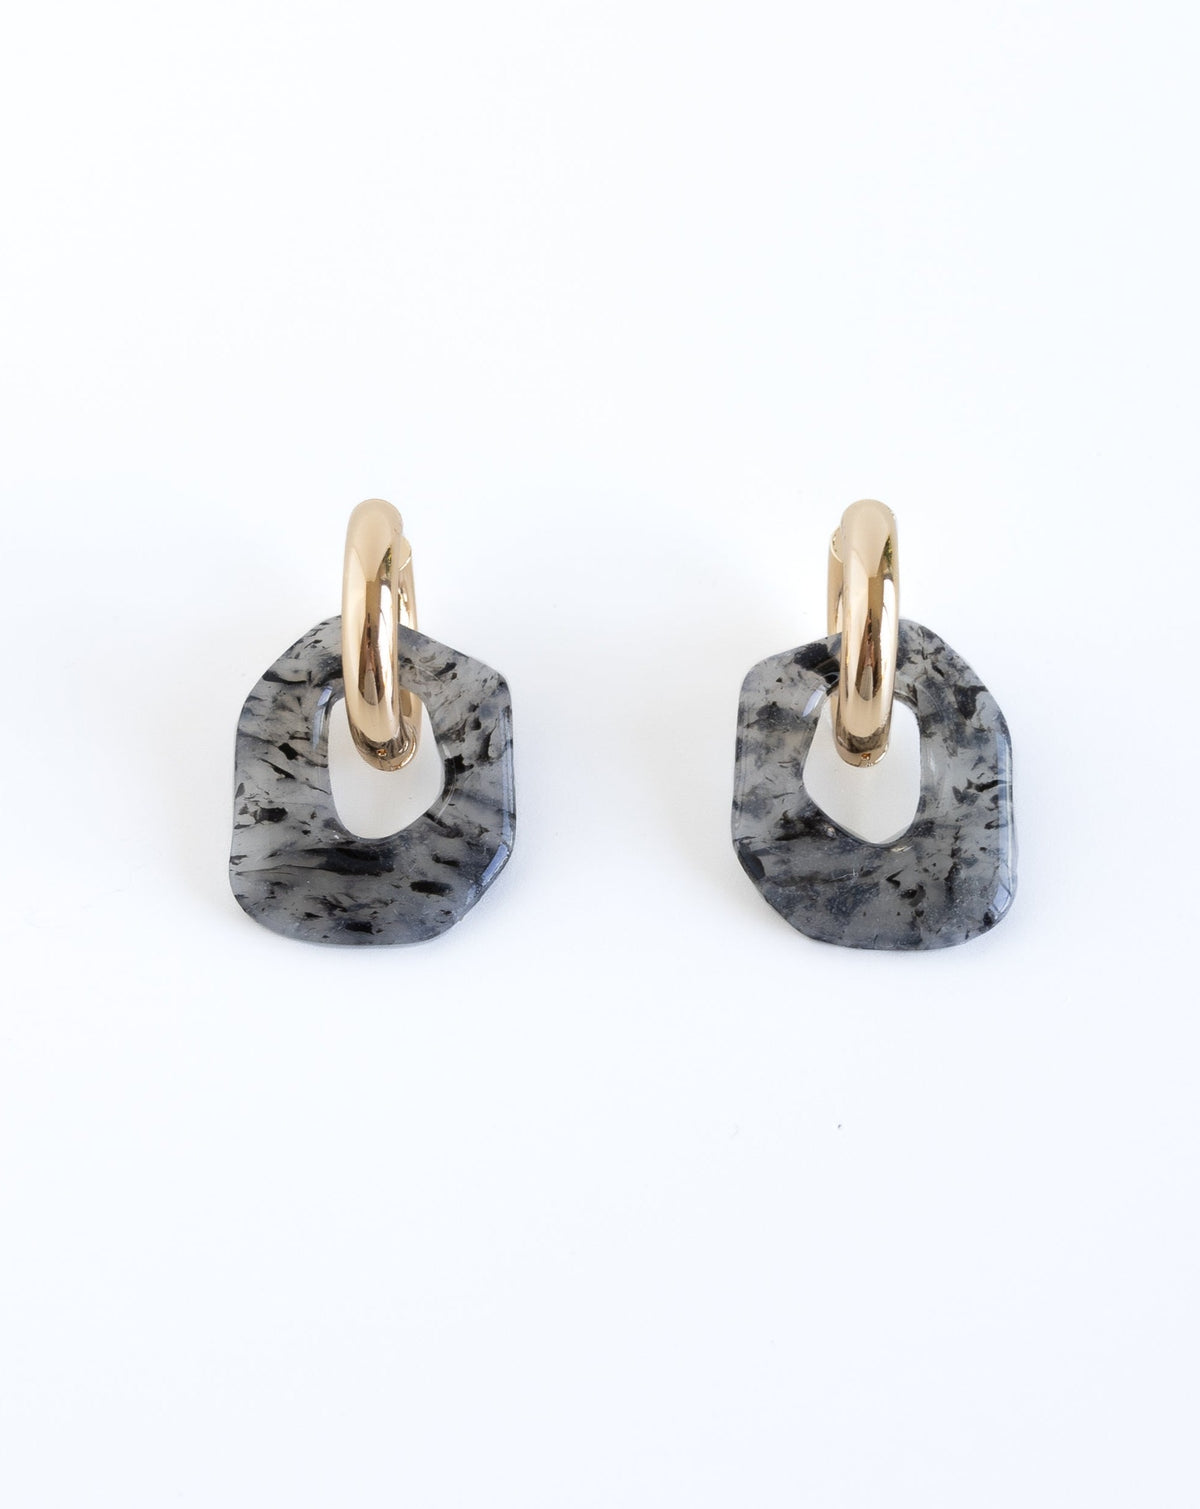 Darien earrings in black Marble pattern with gold hoops, front view